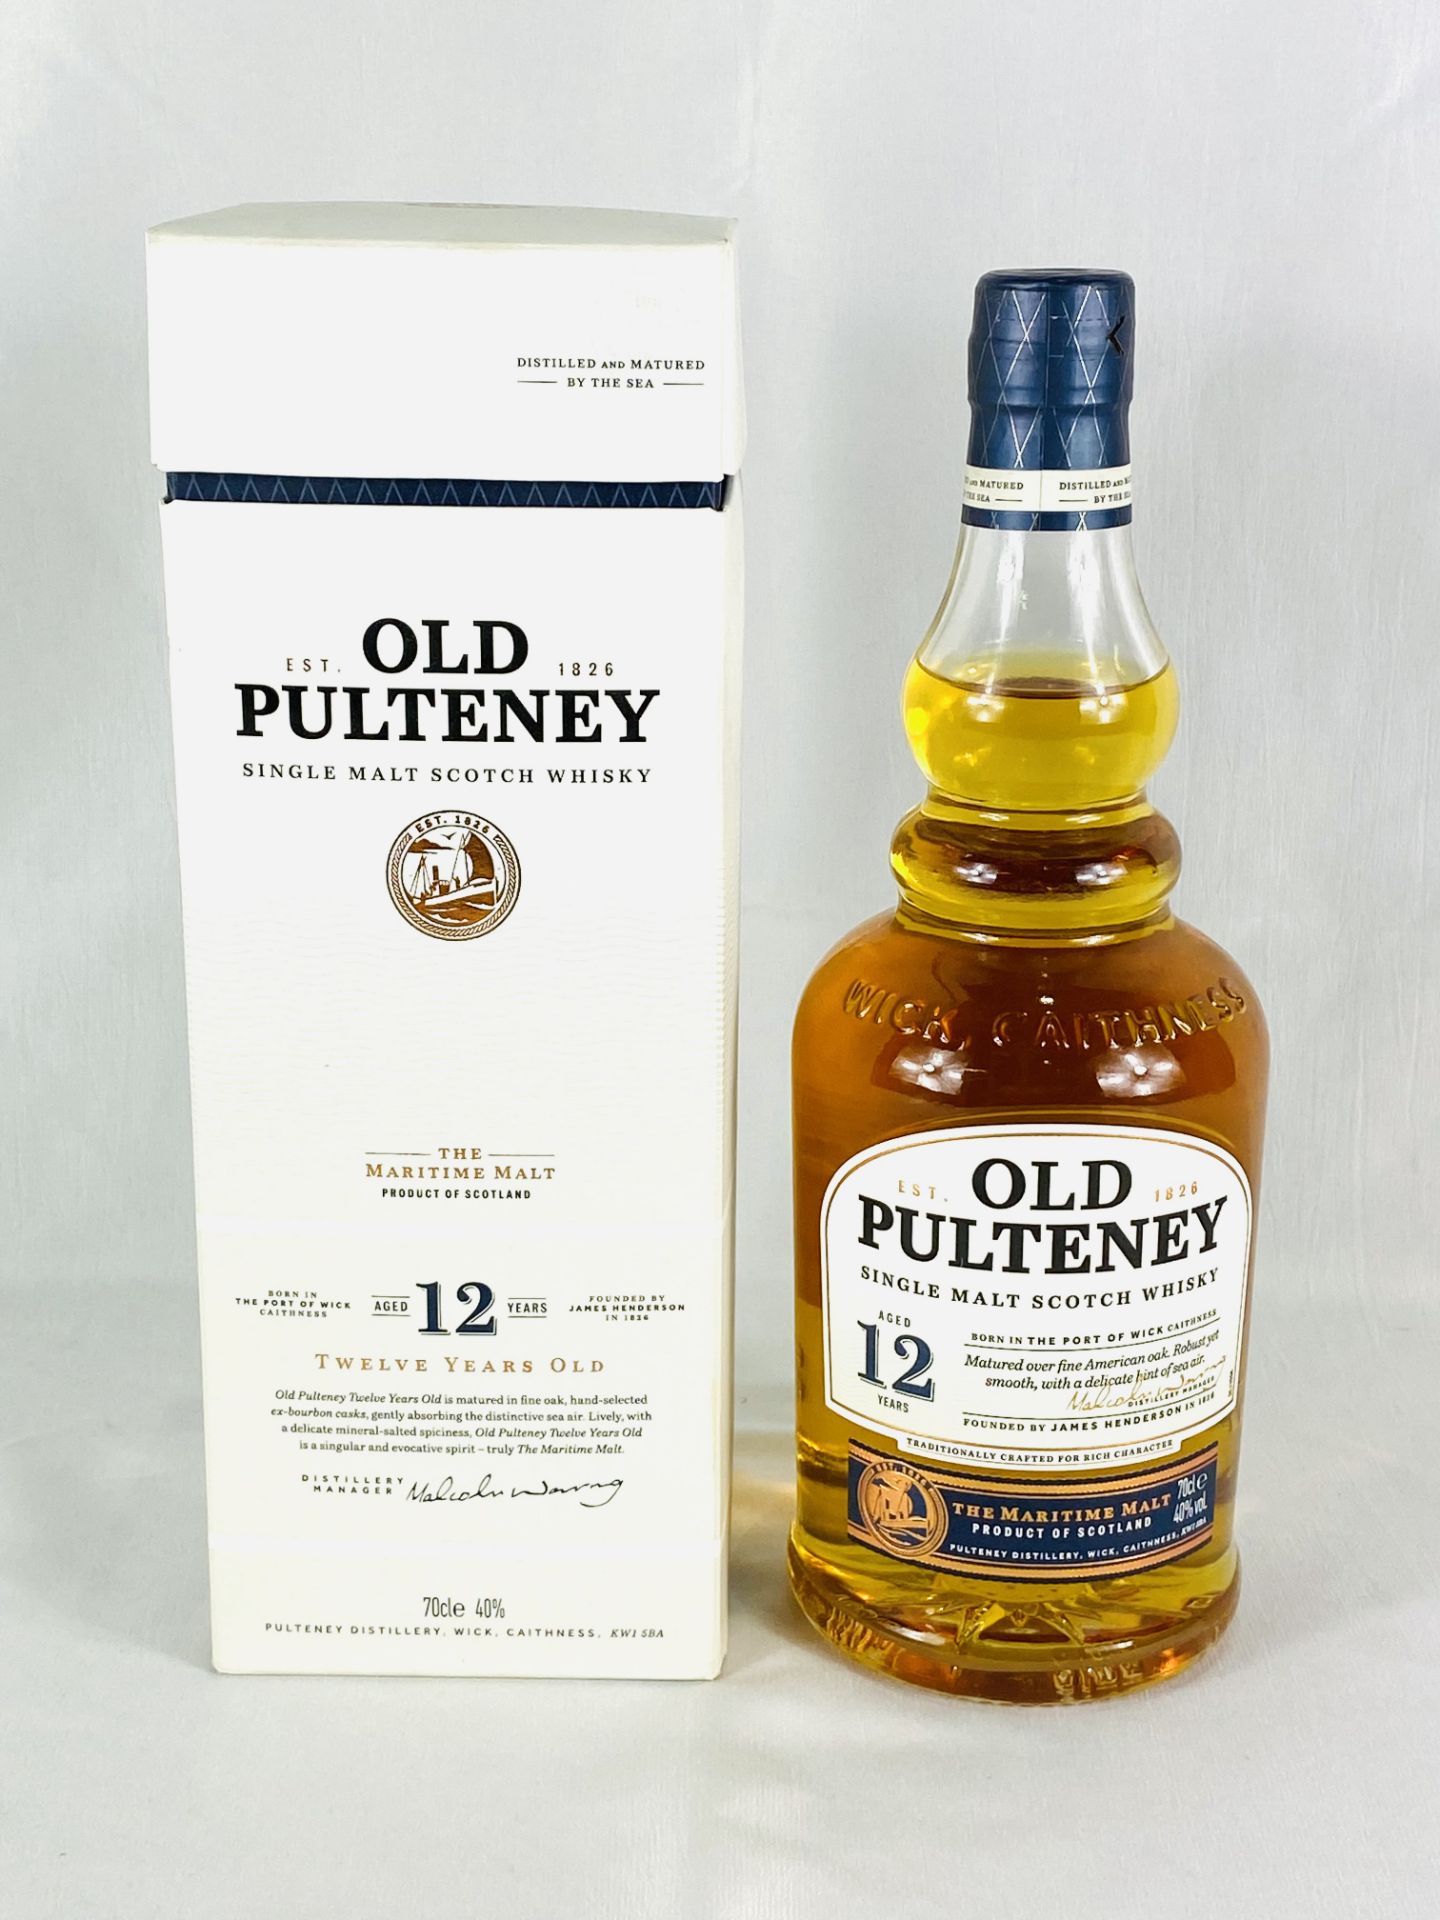 70cl bottle of Old Pulteney Scotch whisky